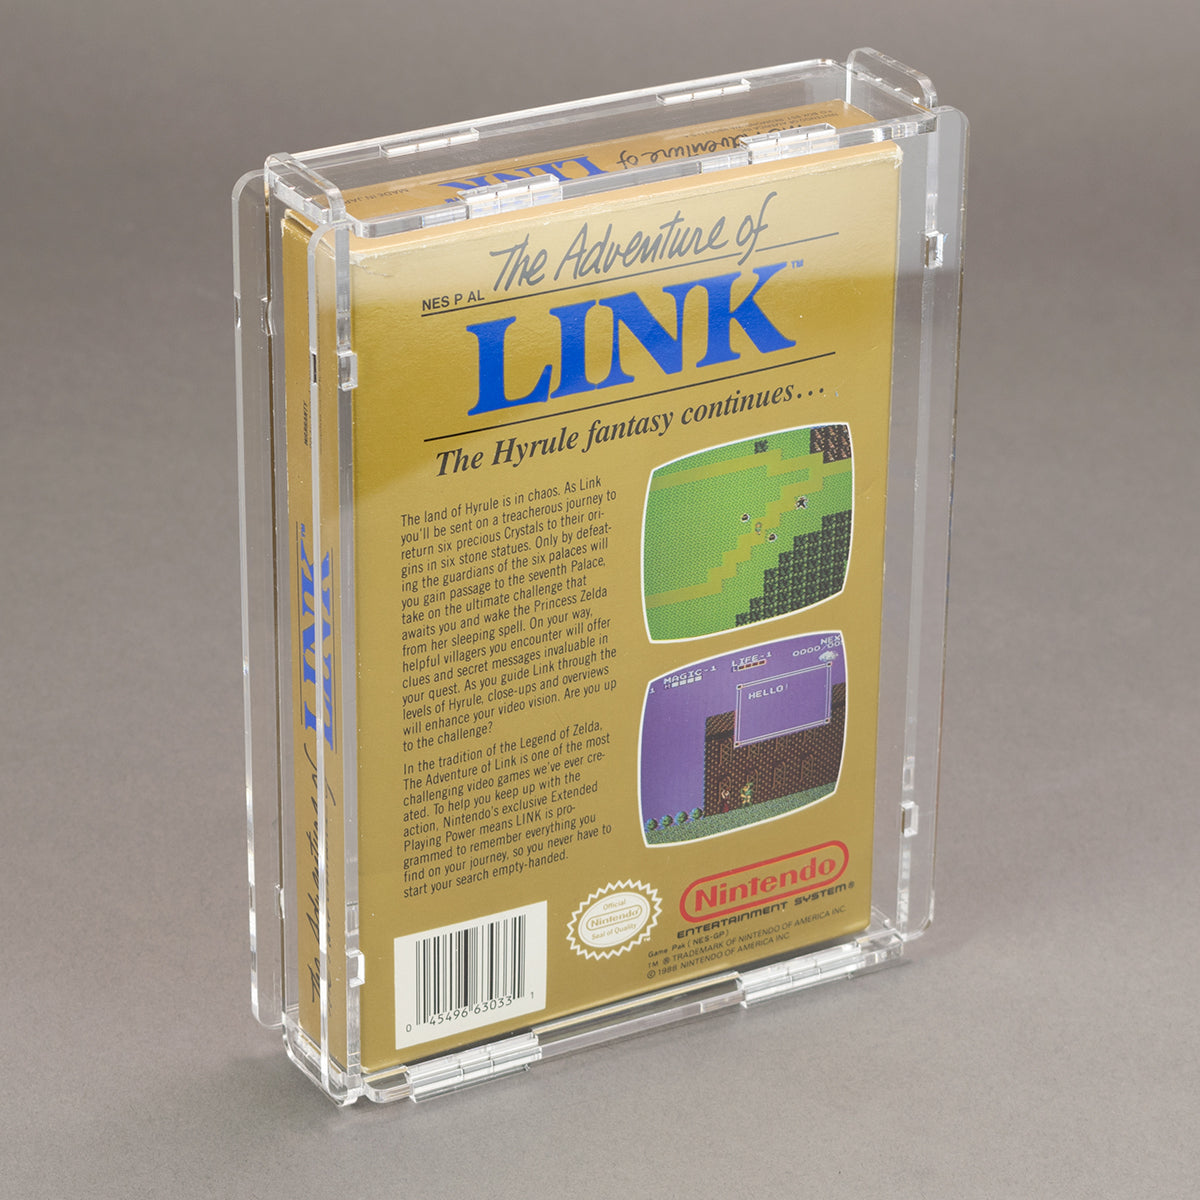 The Legend of Zelda NES Cartridge Display – Rose Colored Gaming